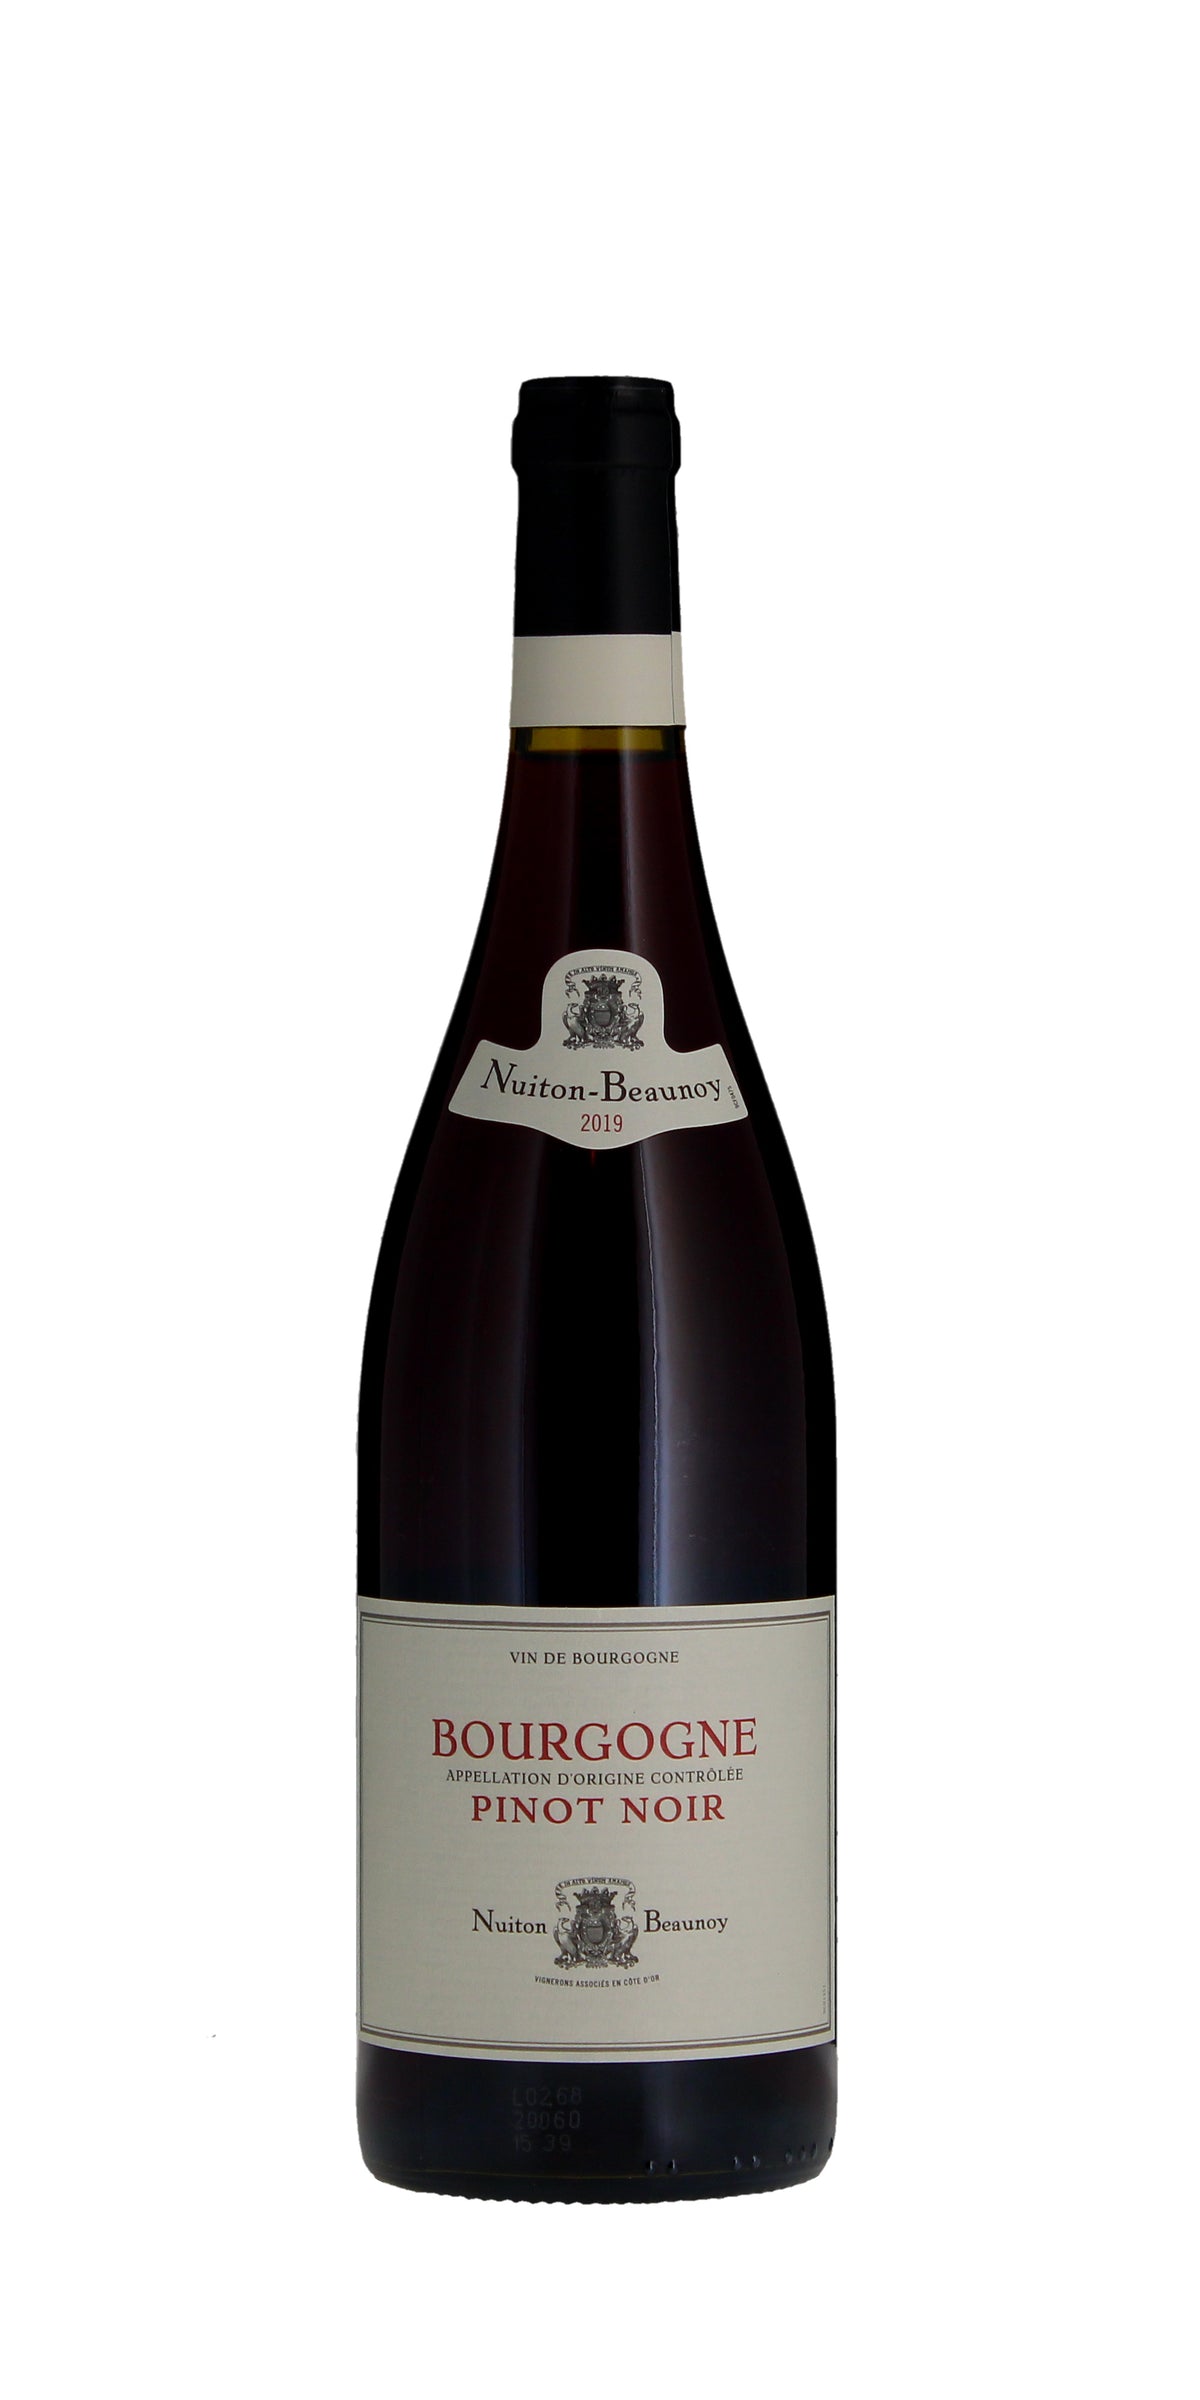 Nuiton-Beaunoy Bourgogne Pinot Noir 2019